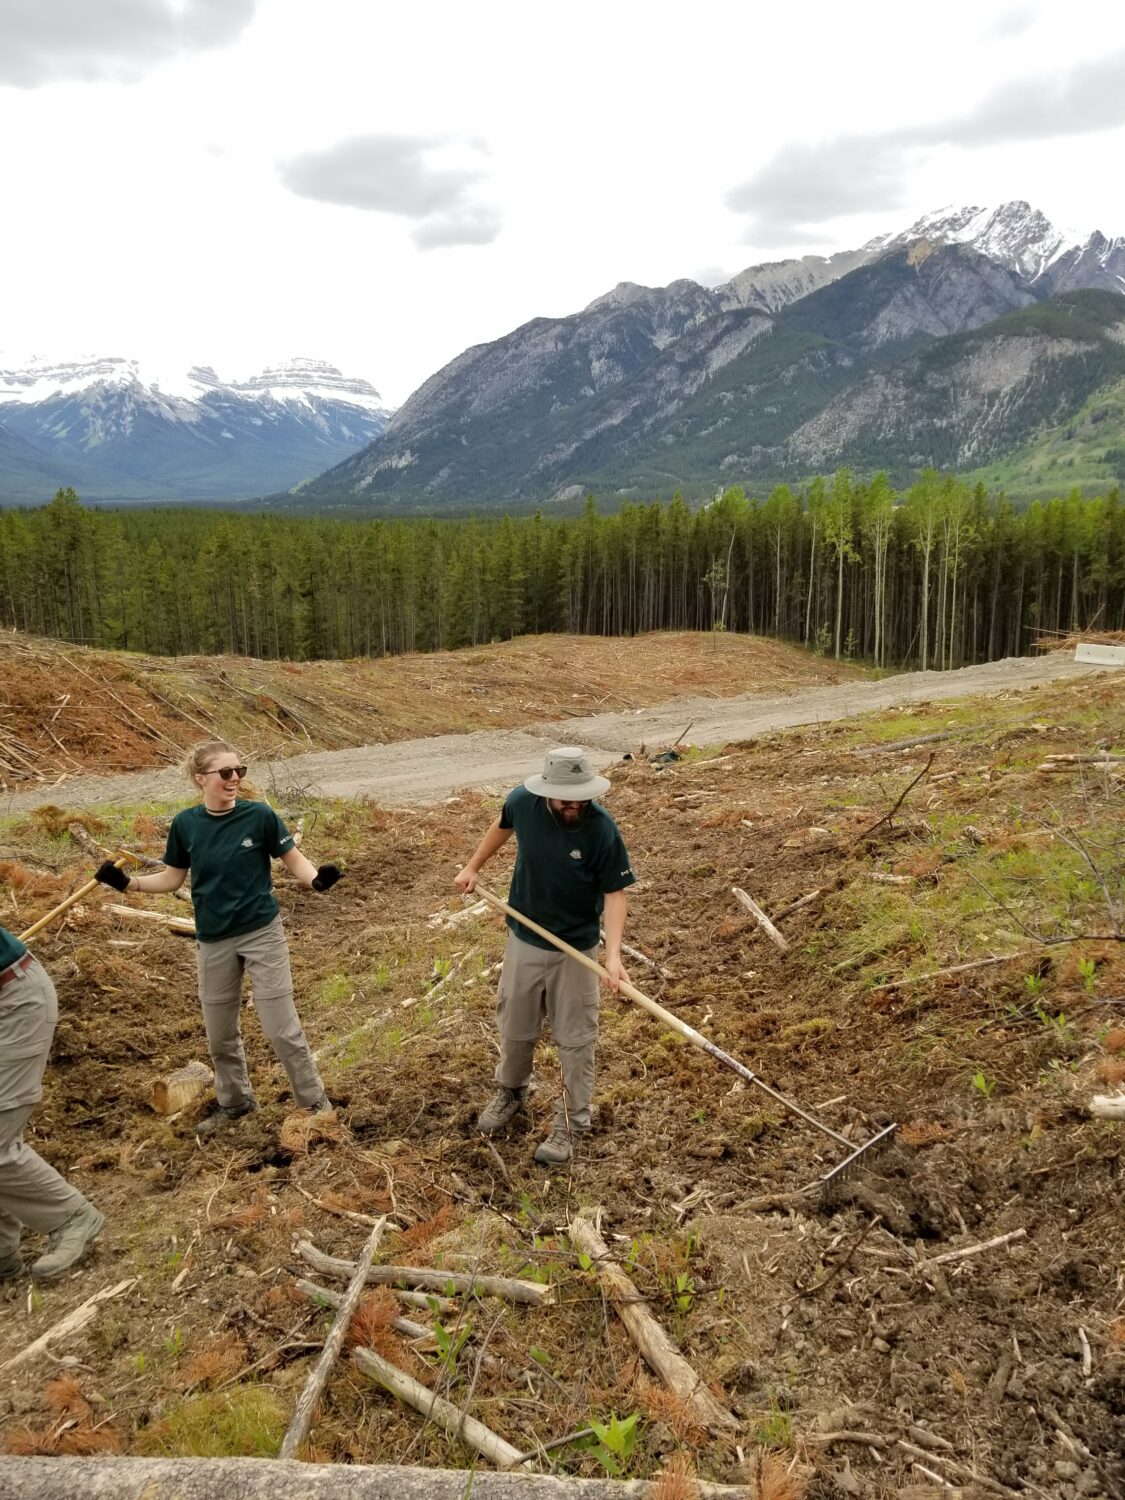 Parks employees raking forestry debris